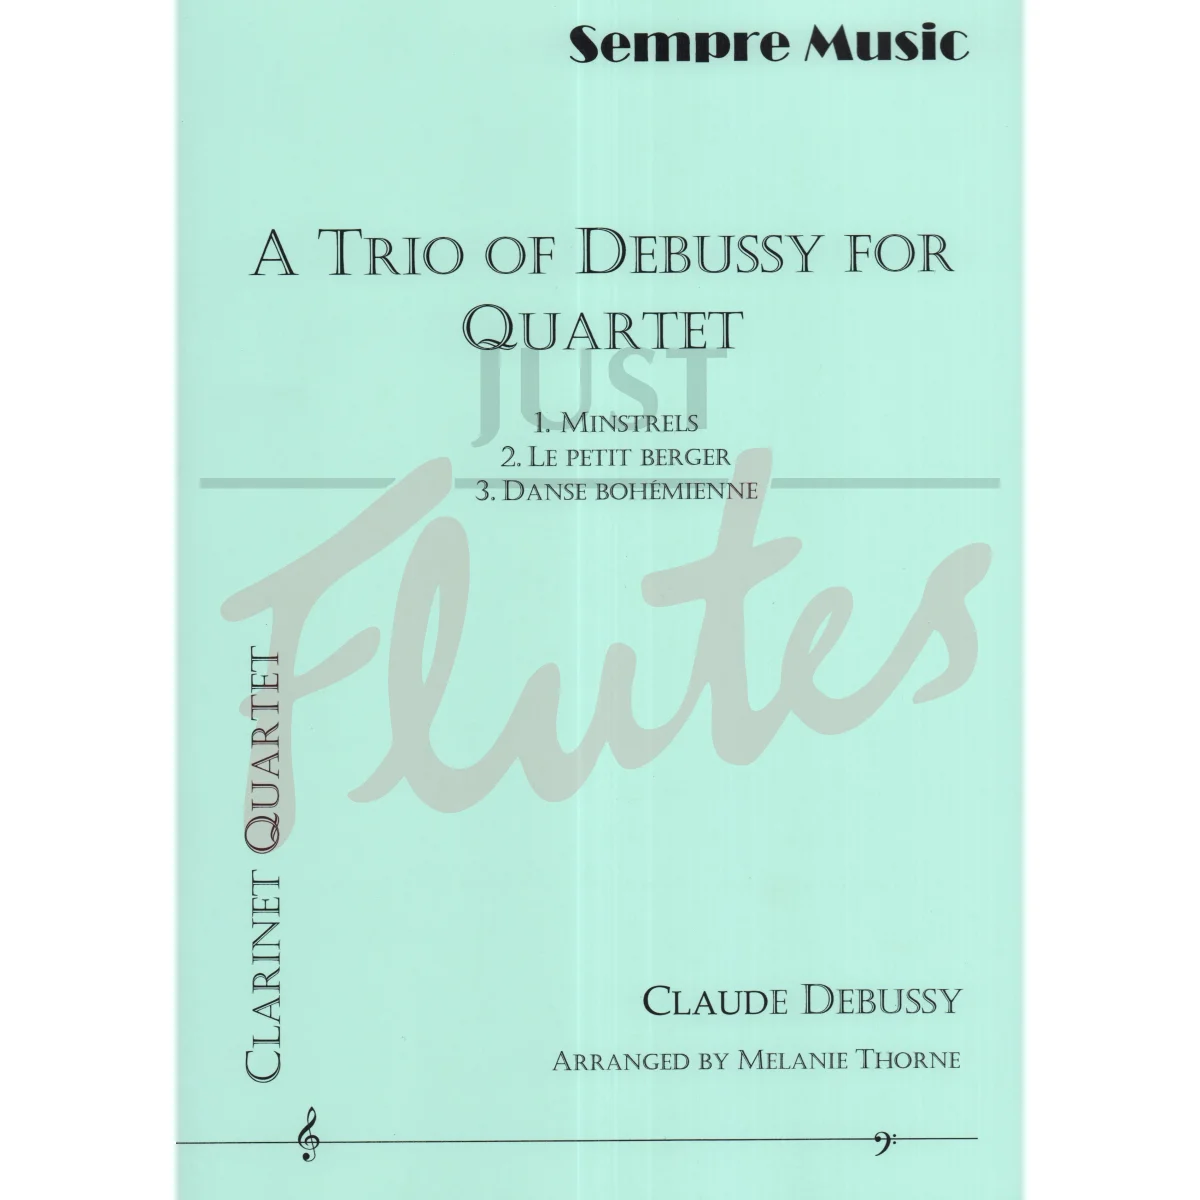 A Trio of Debussy for Clarinet Quartet